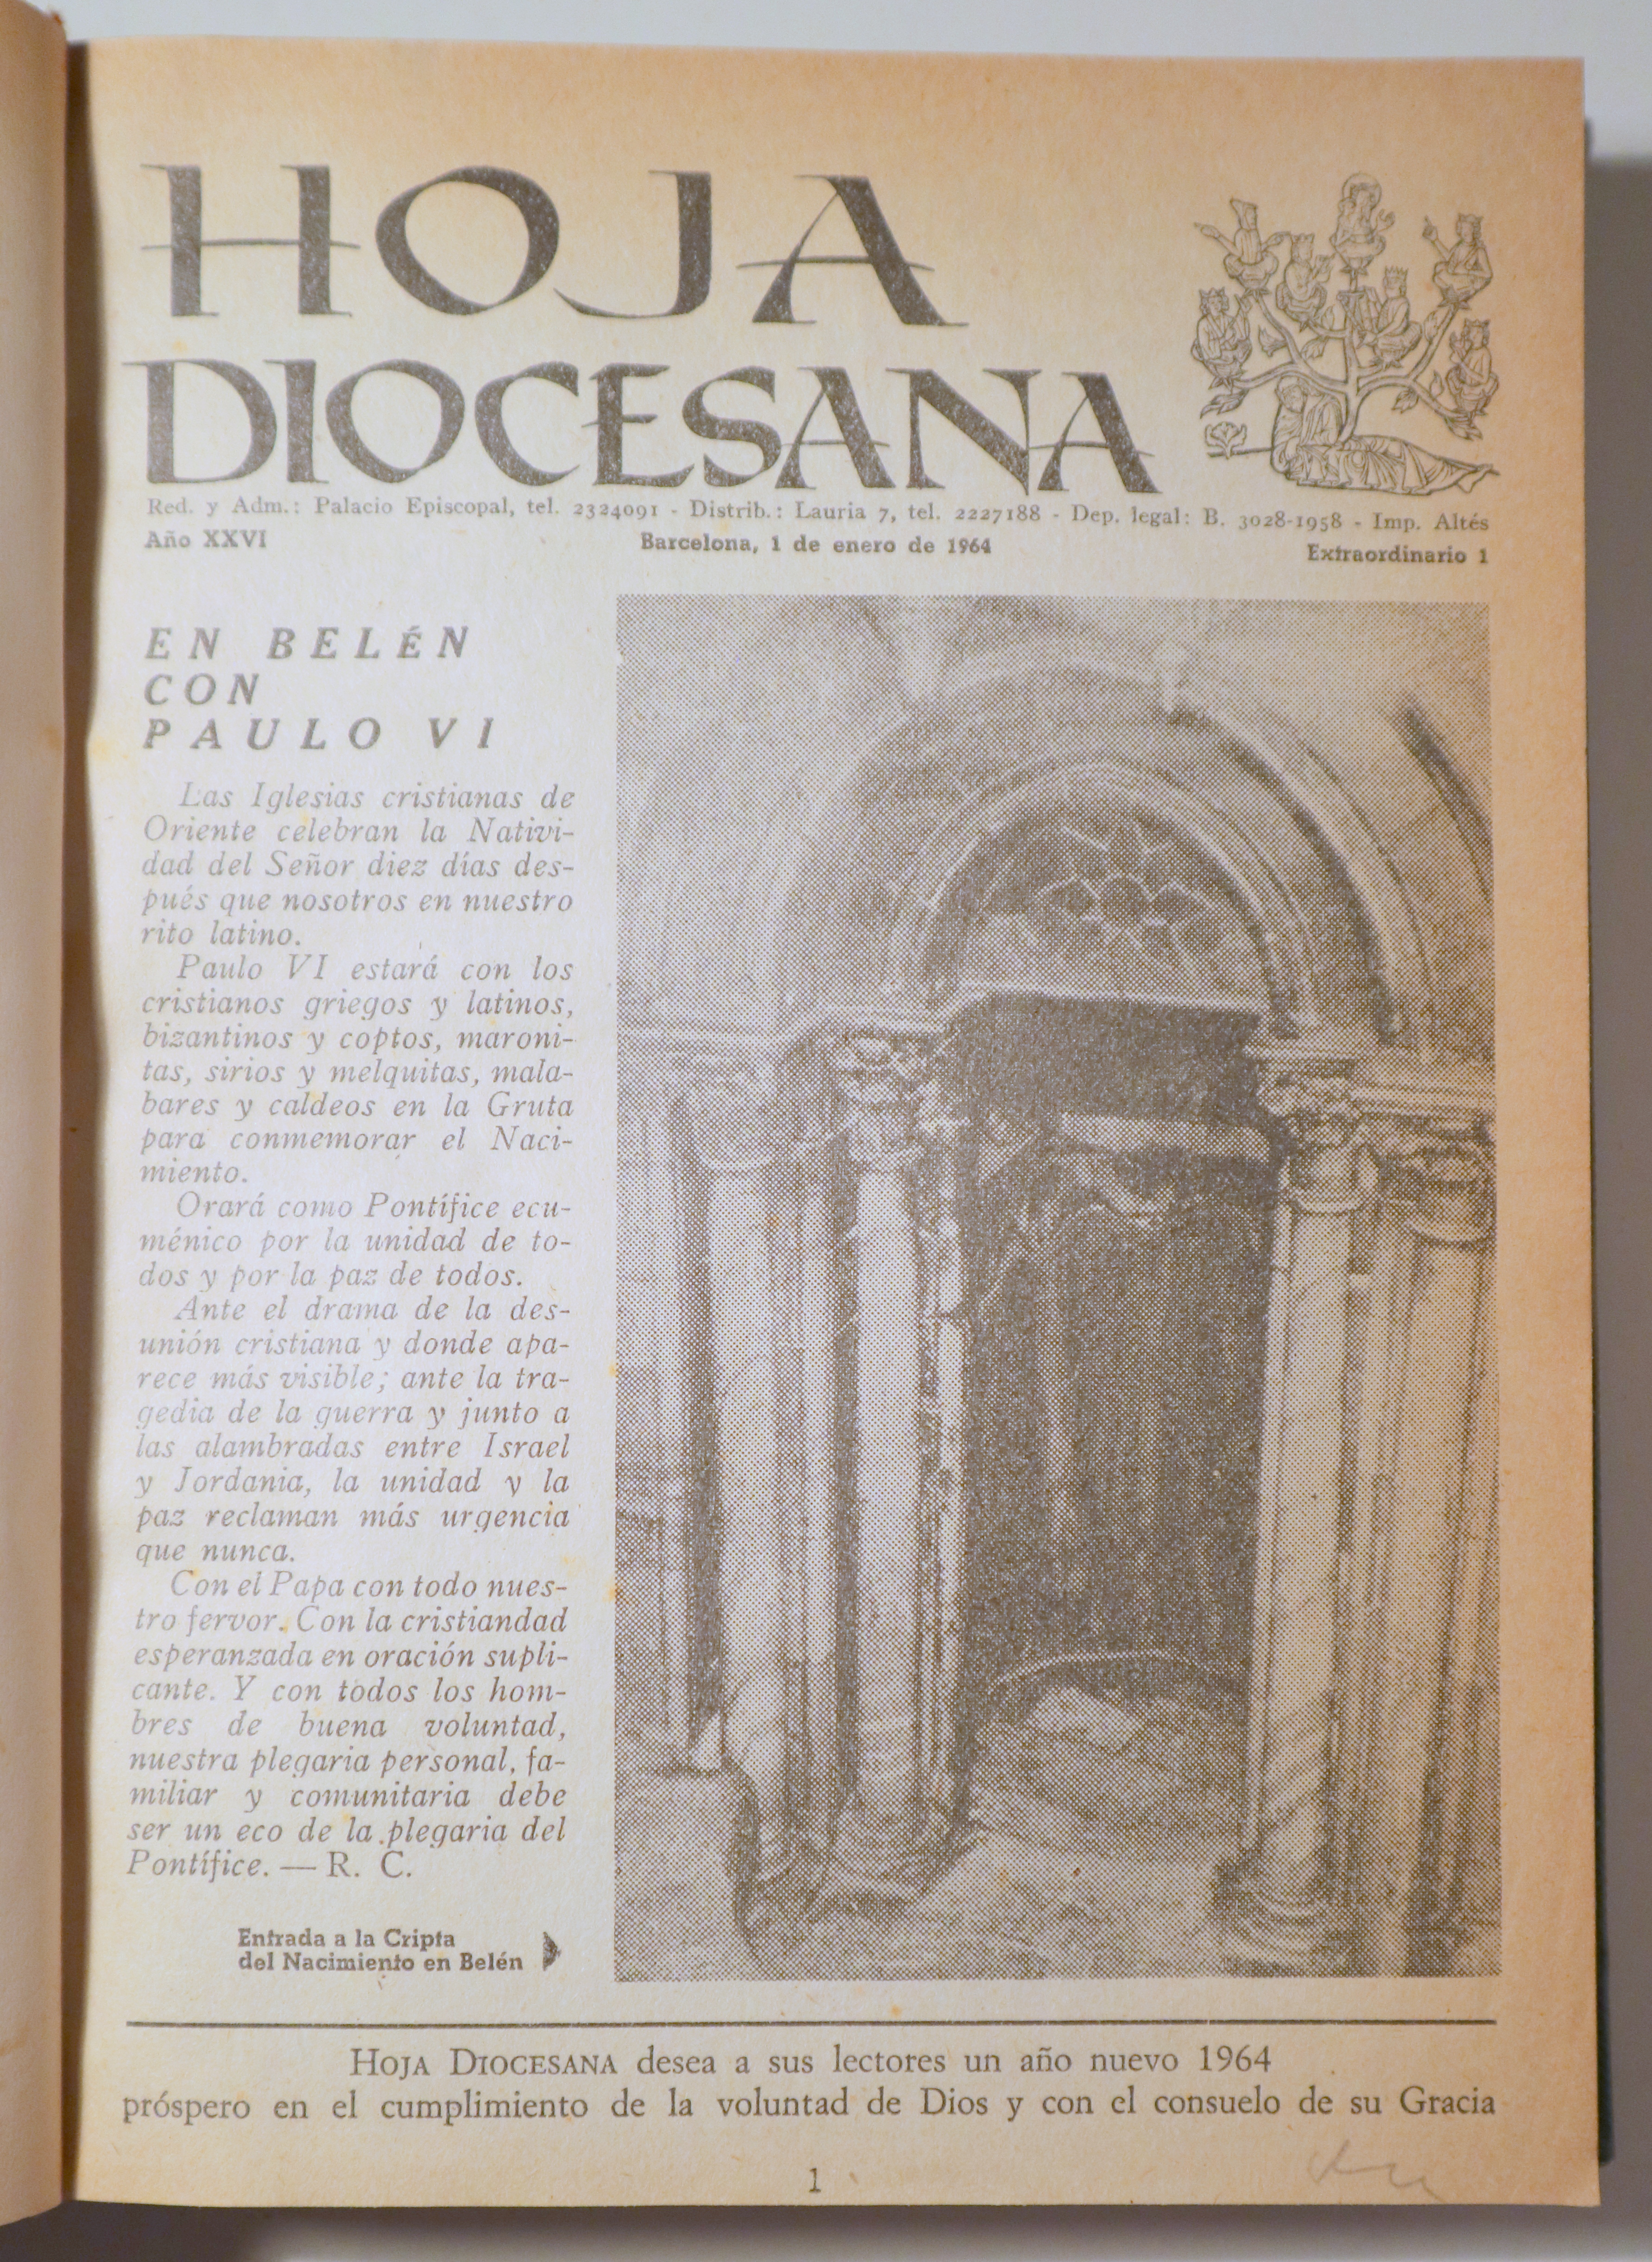 HOJA DIOCESANA 1964 - Barcelona 1964 - Muy ilustrado